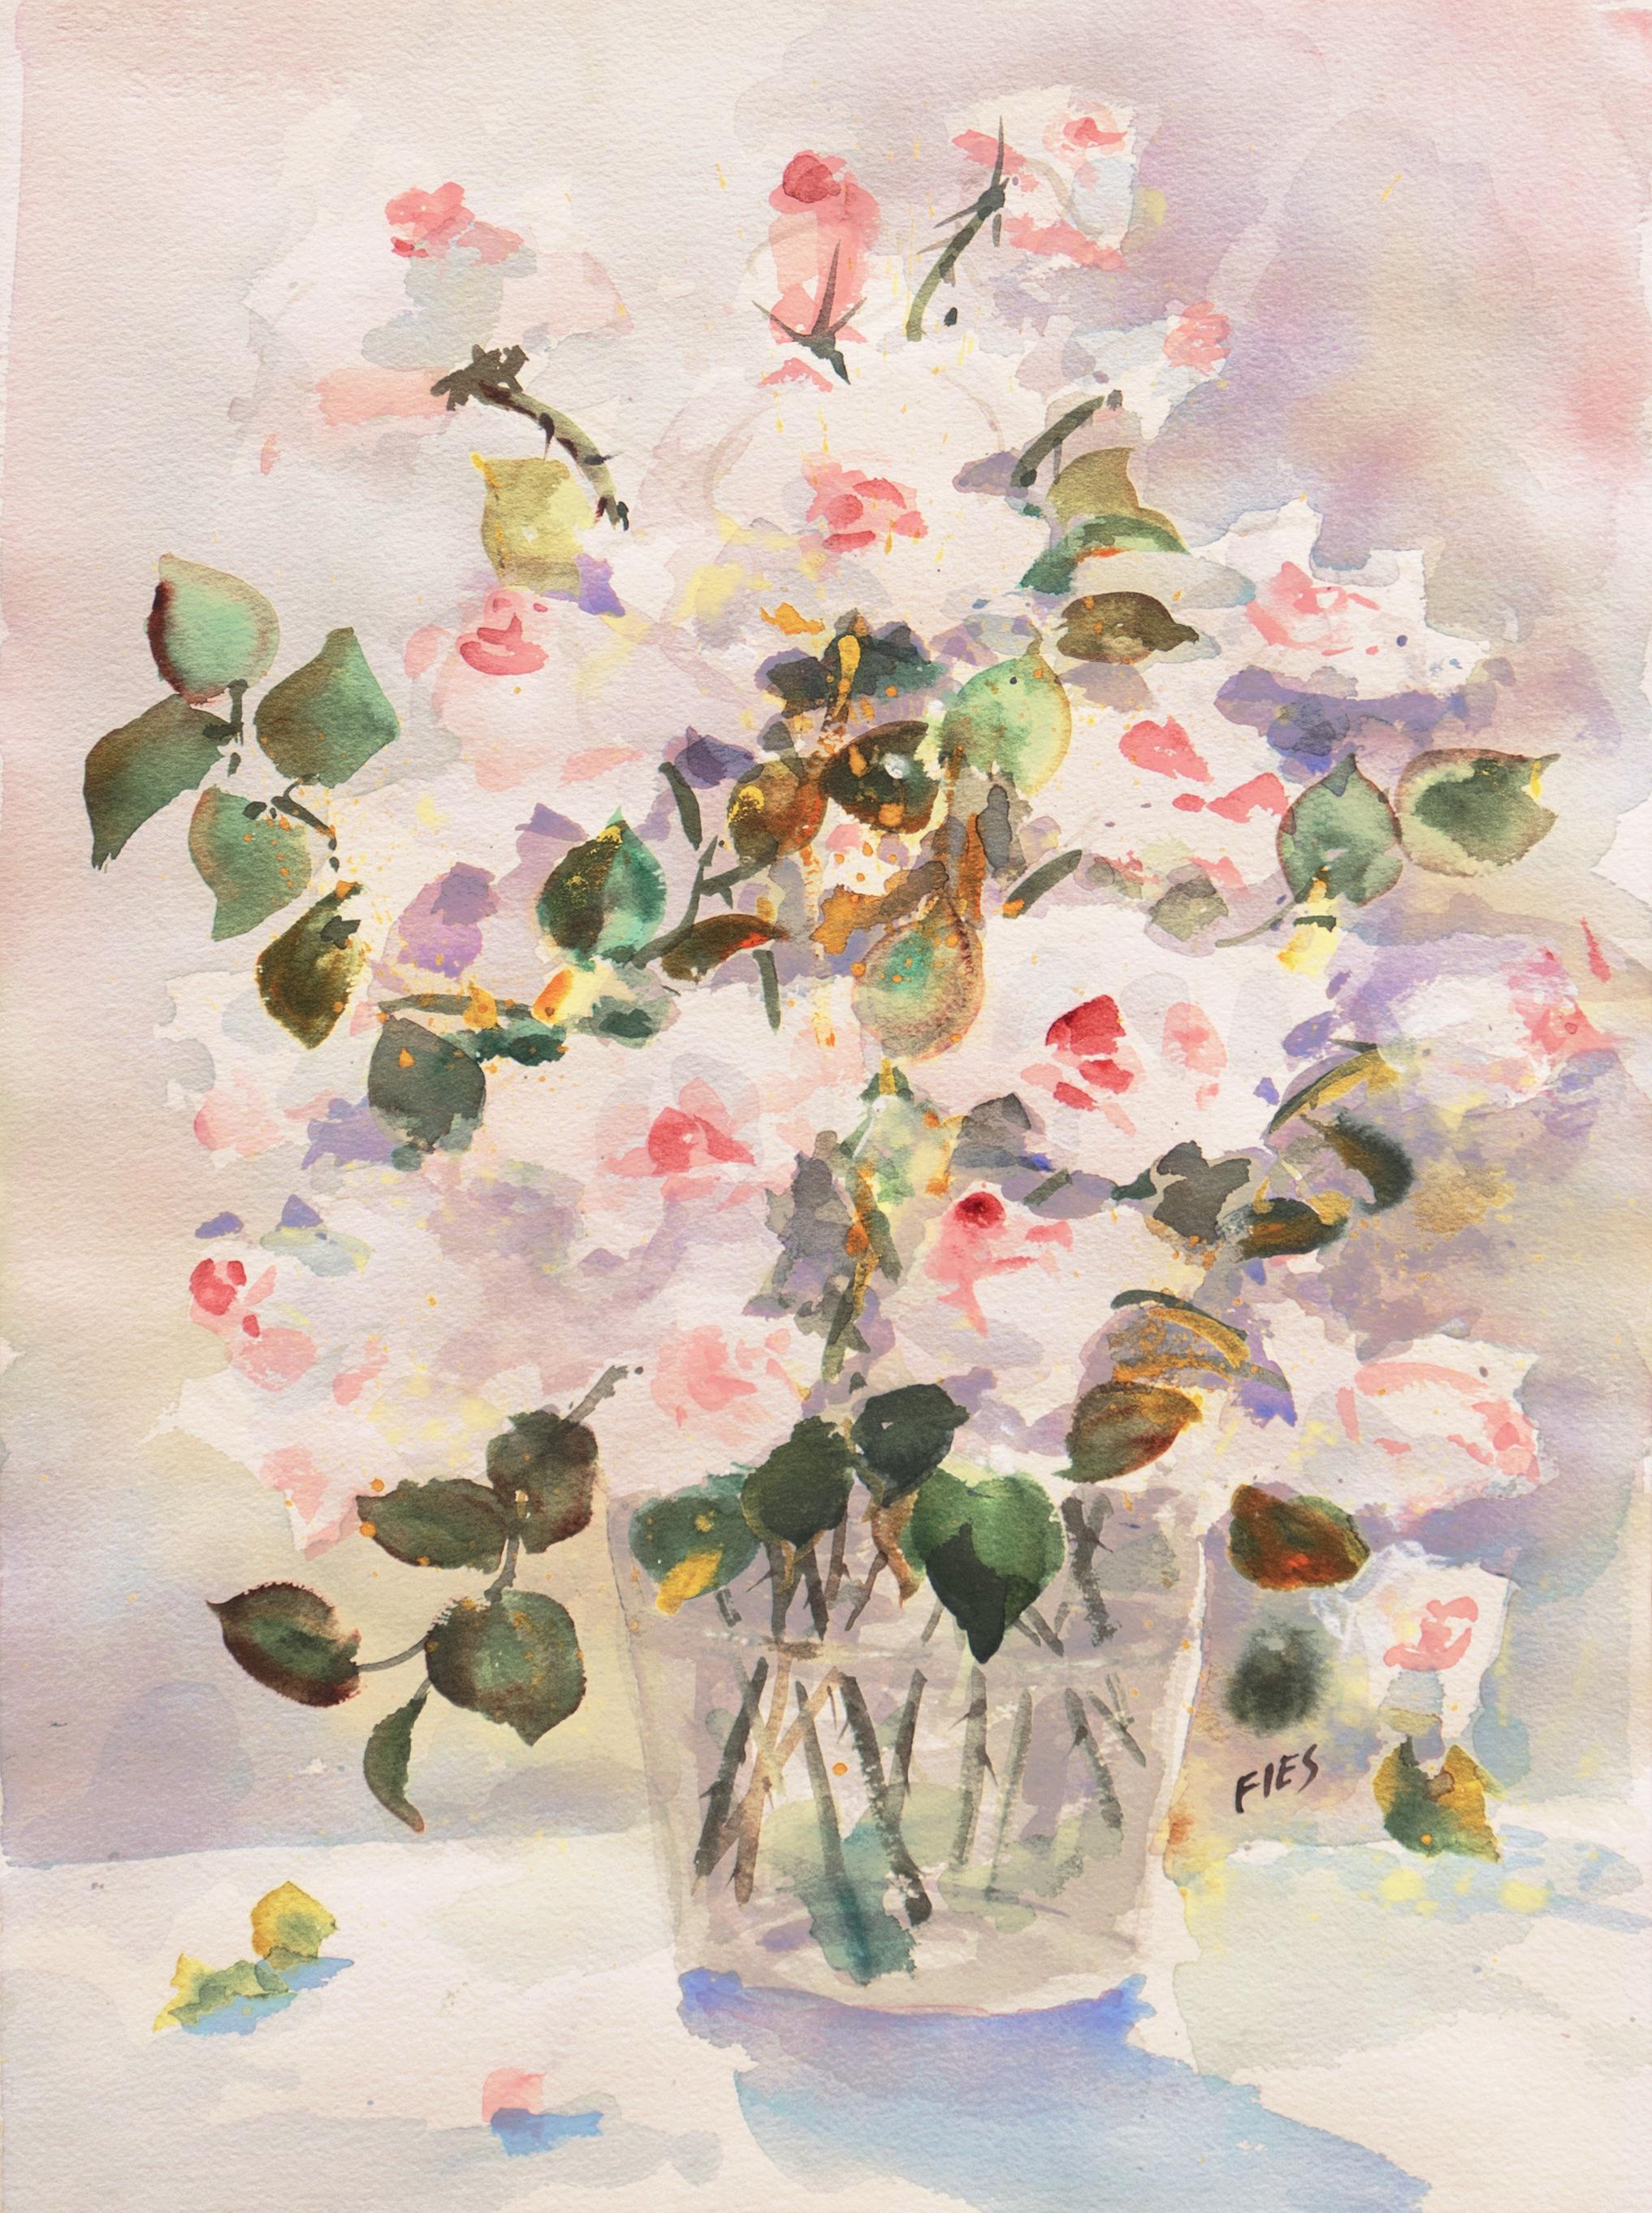 Gladys Louise Bowman Fies Landscape Art - 'Still Life of Roses', Post Impressionist California Woman Artist, SWA